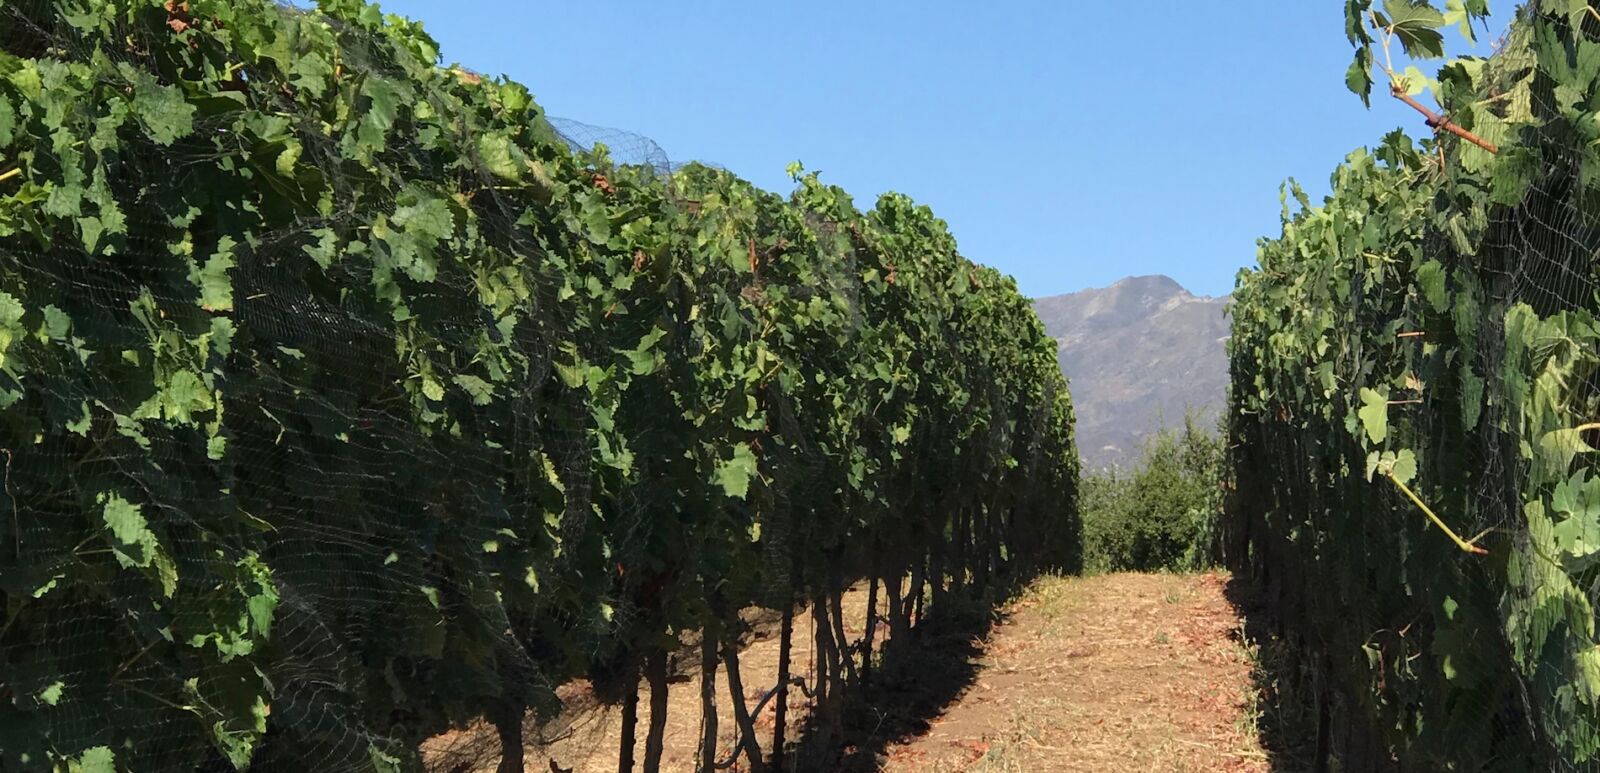 Vineyard in Ojai Valley, California.